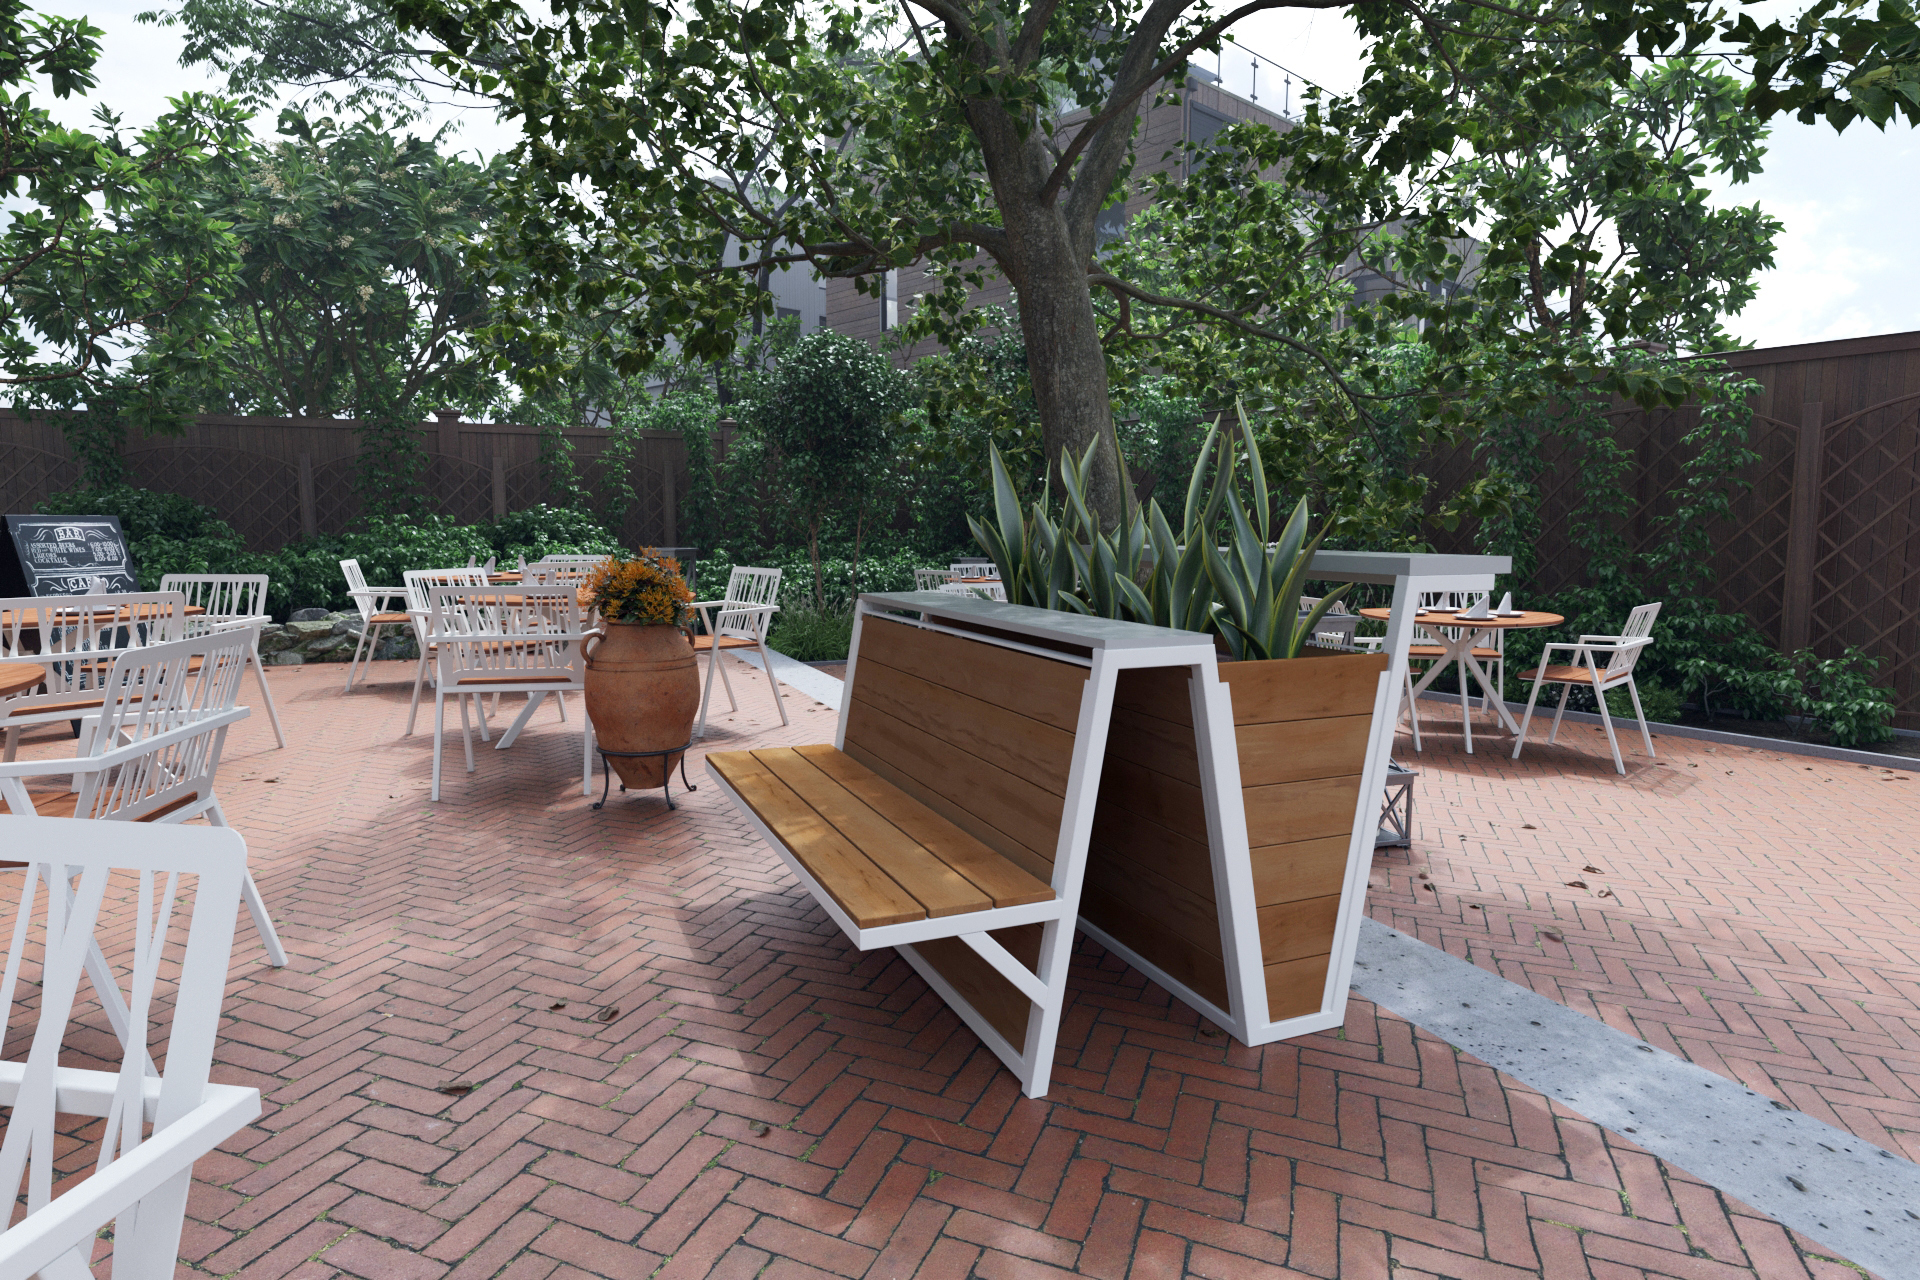 patio planter with bench modern design